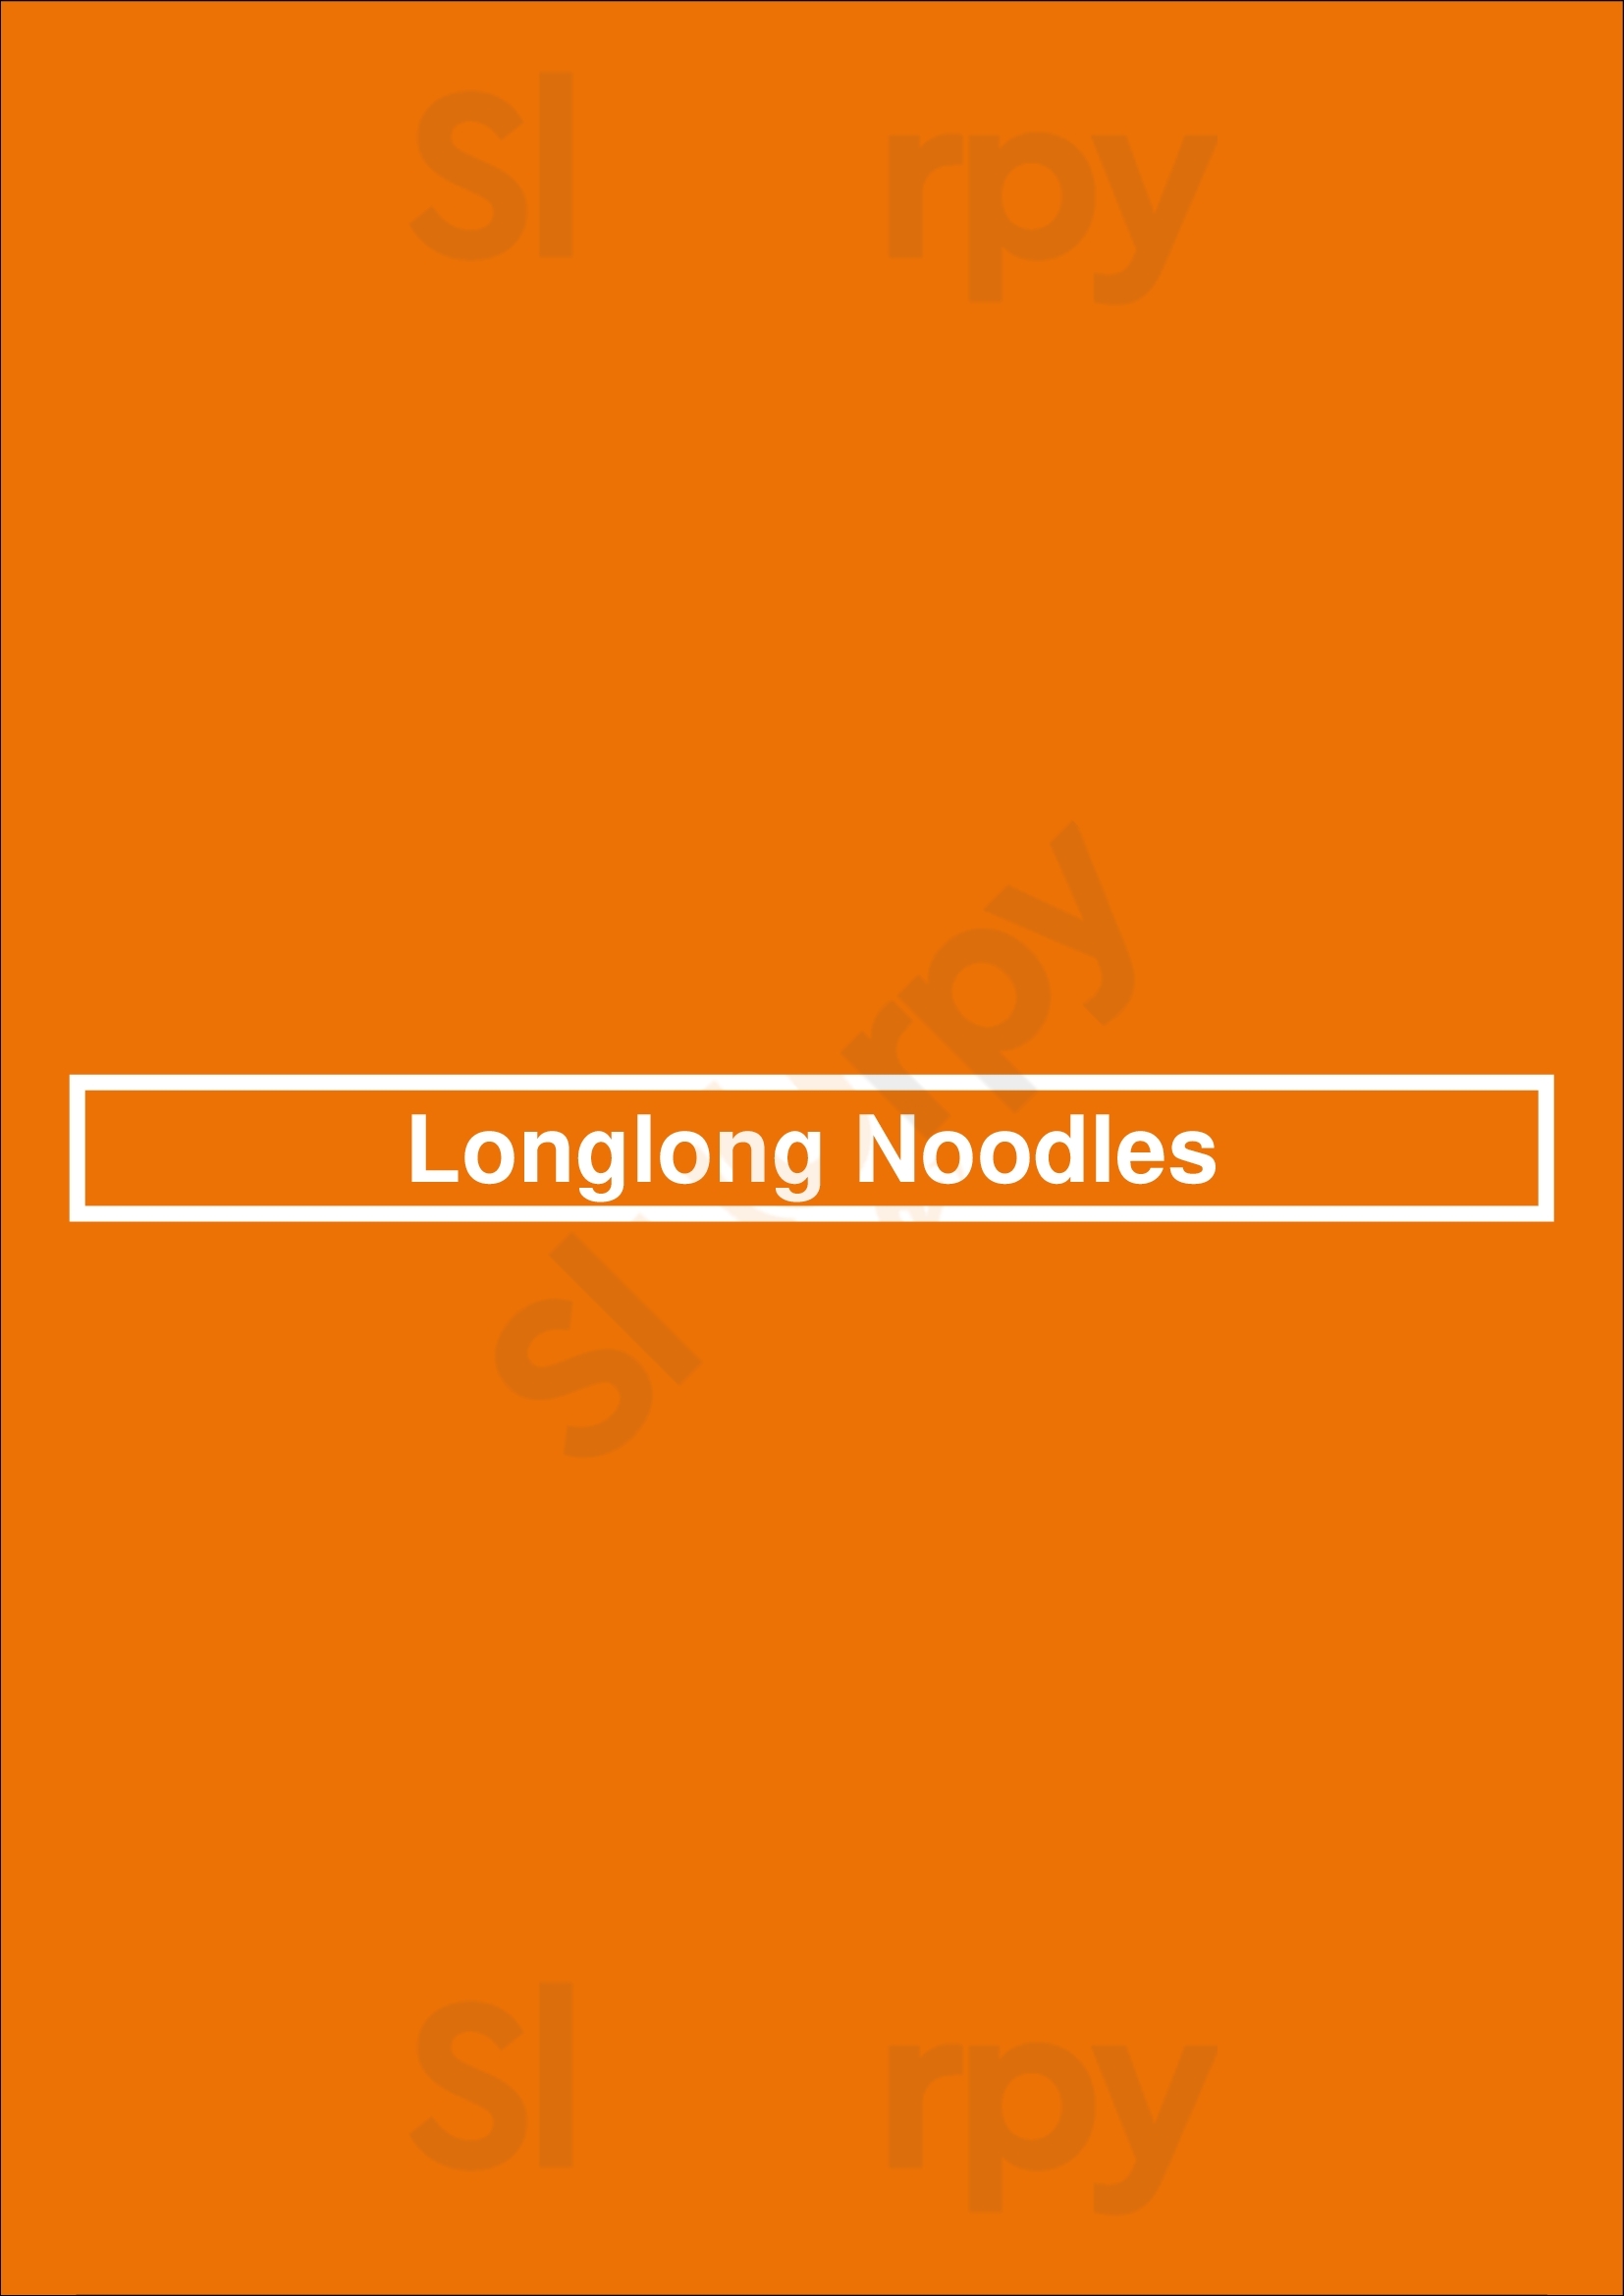 Longlong Noodles Ottawa Menu - 1